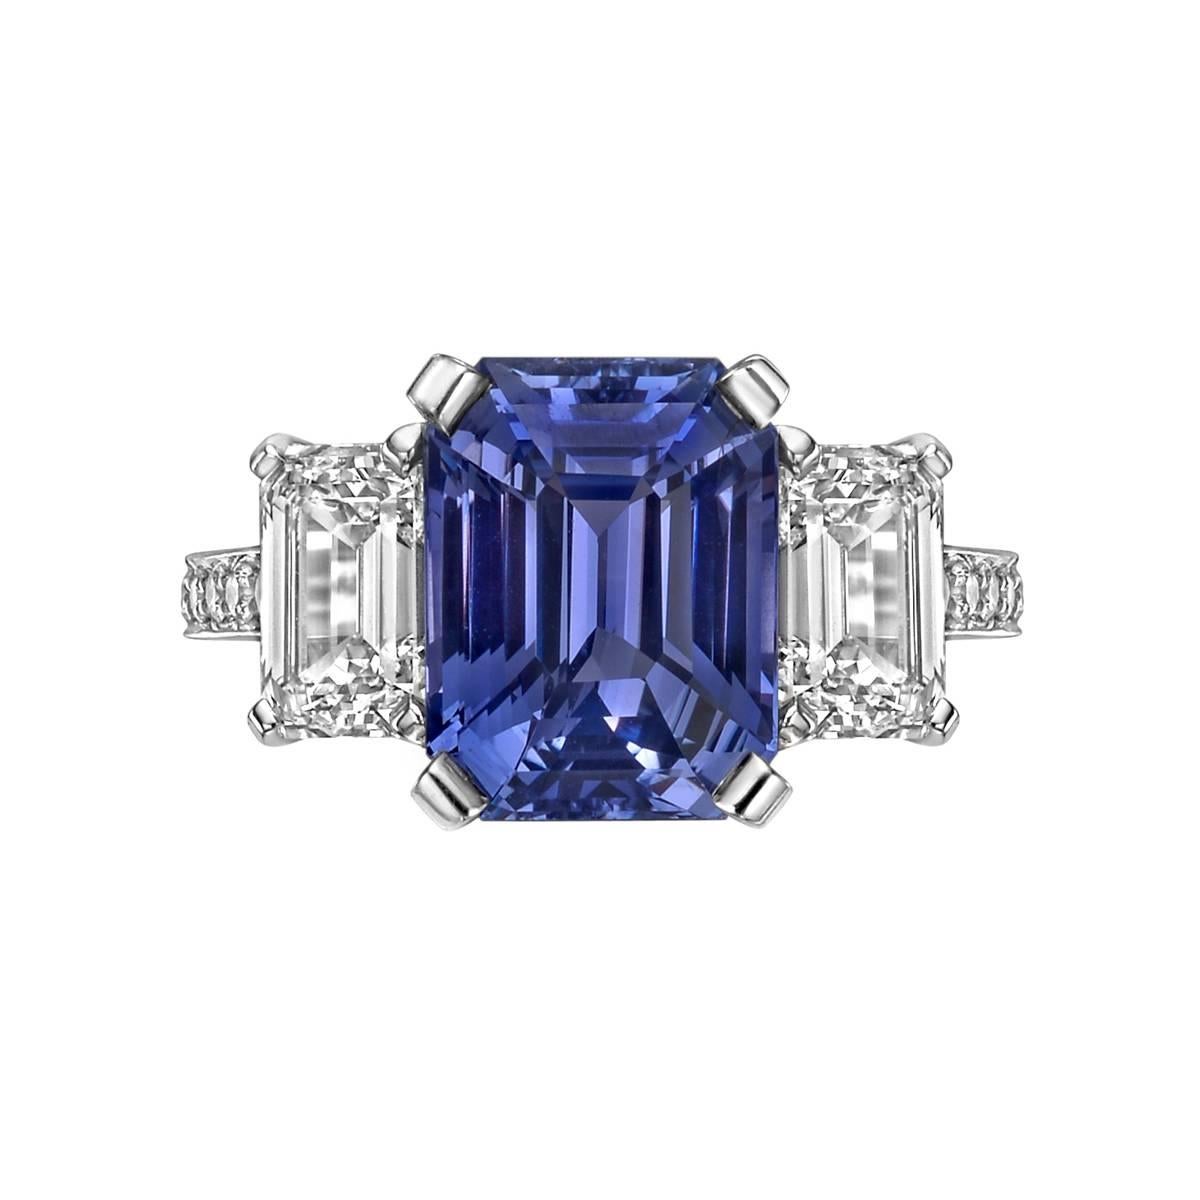 Betteridge 5.02 Carat Violet Sapphire and Diamond Ring